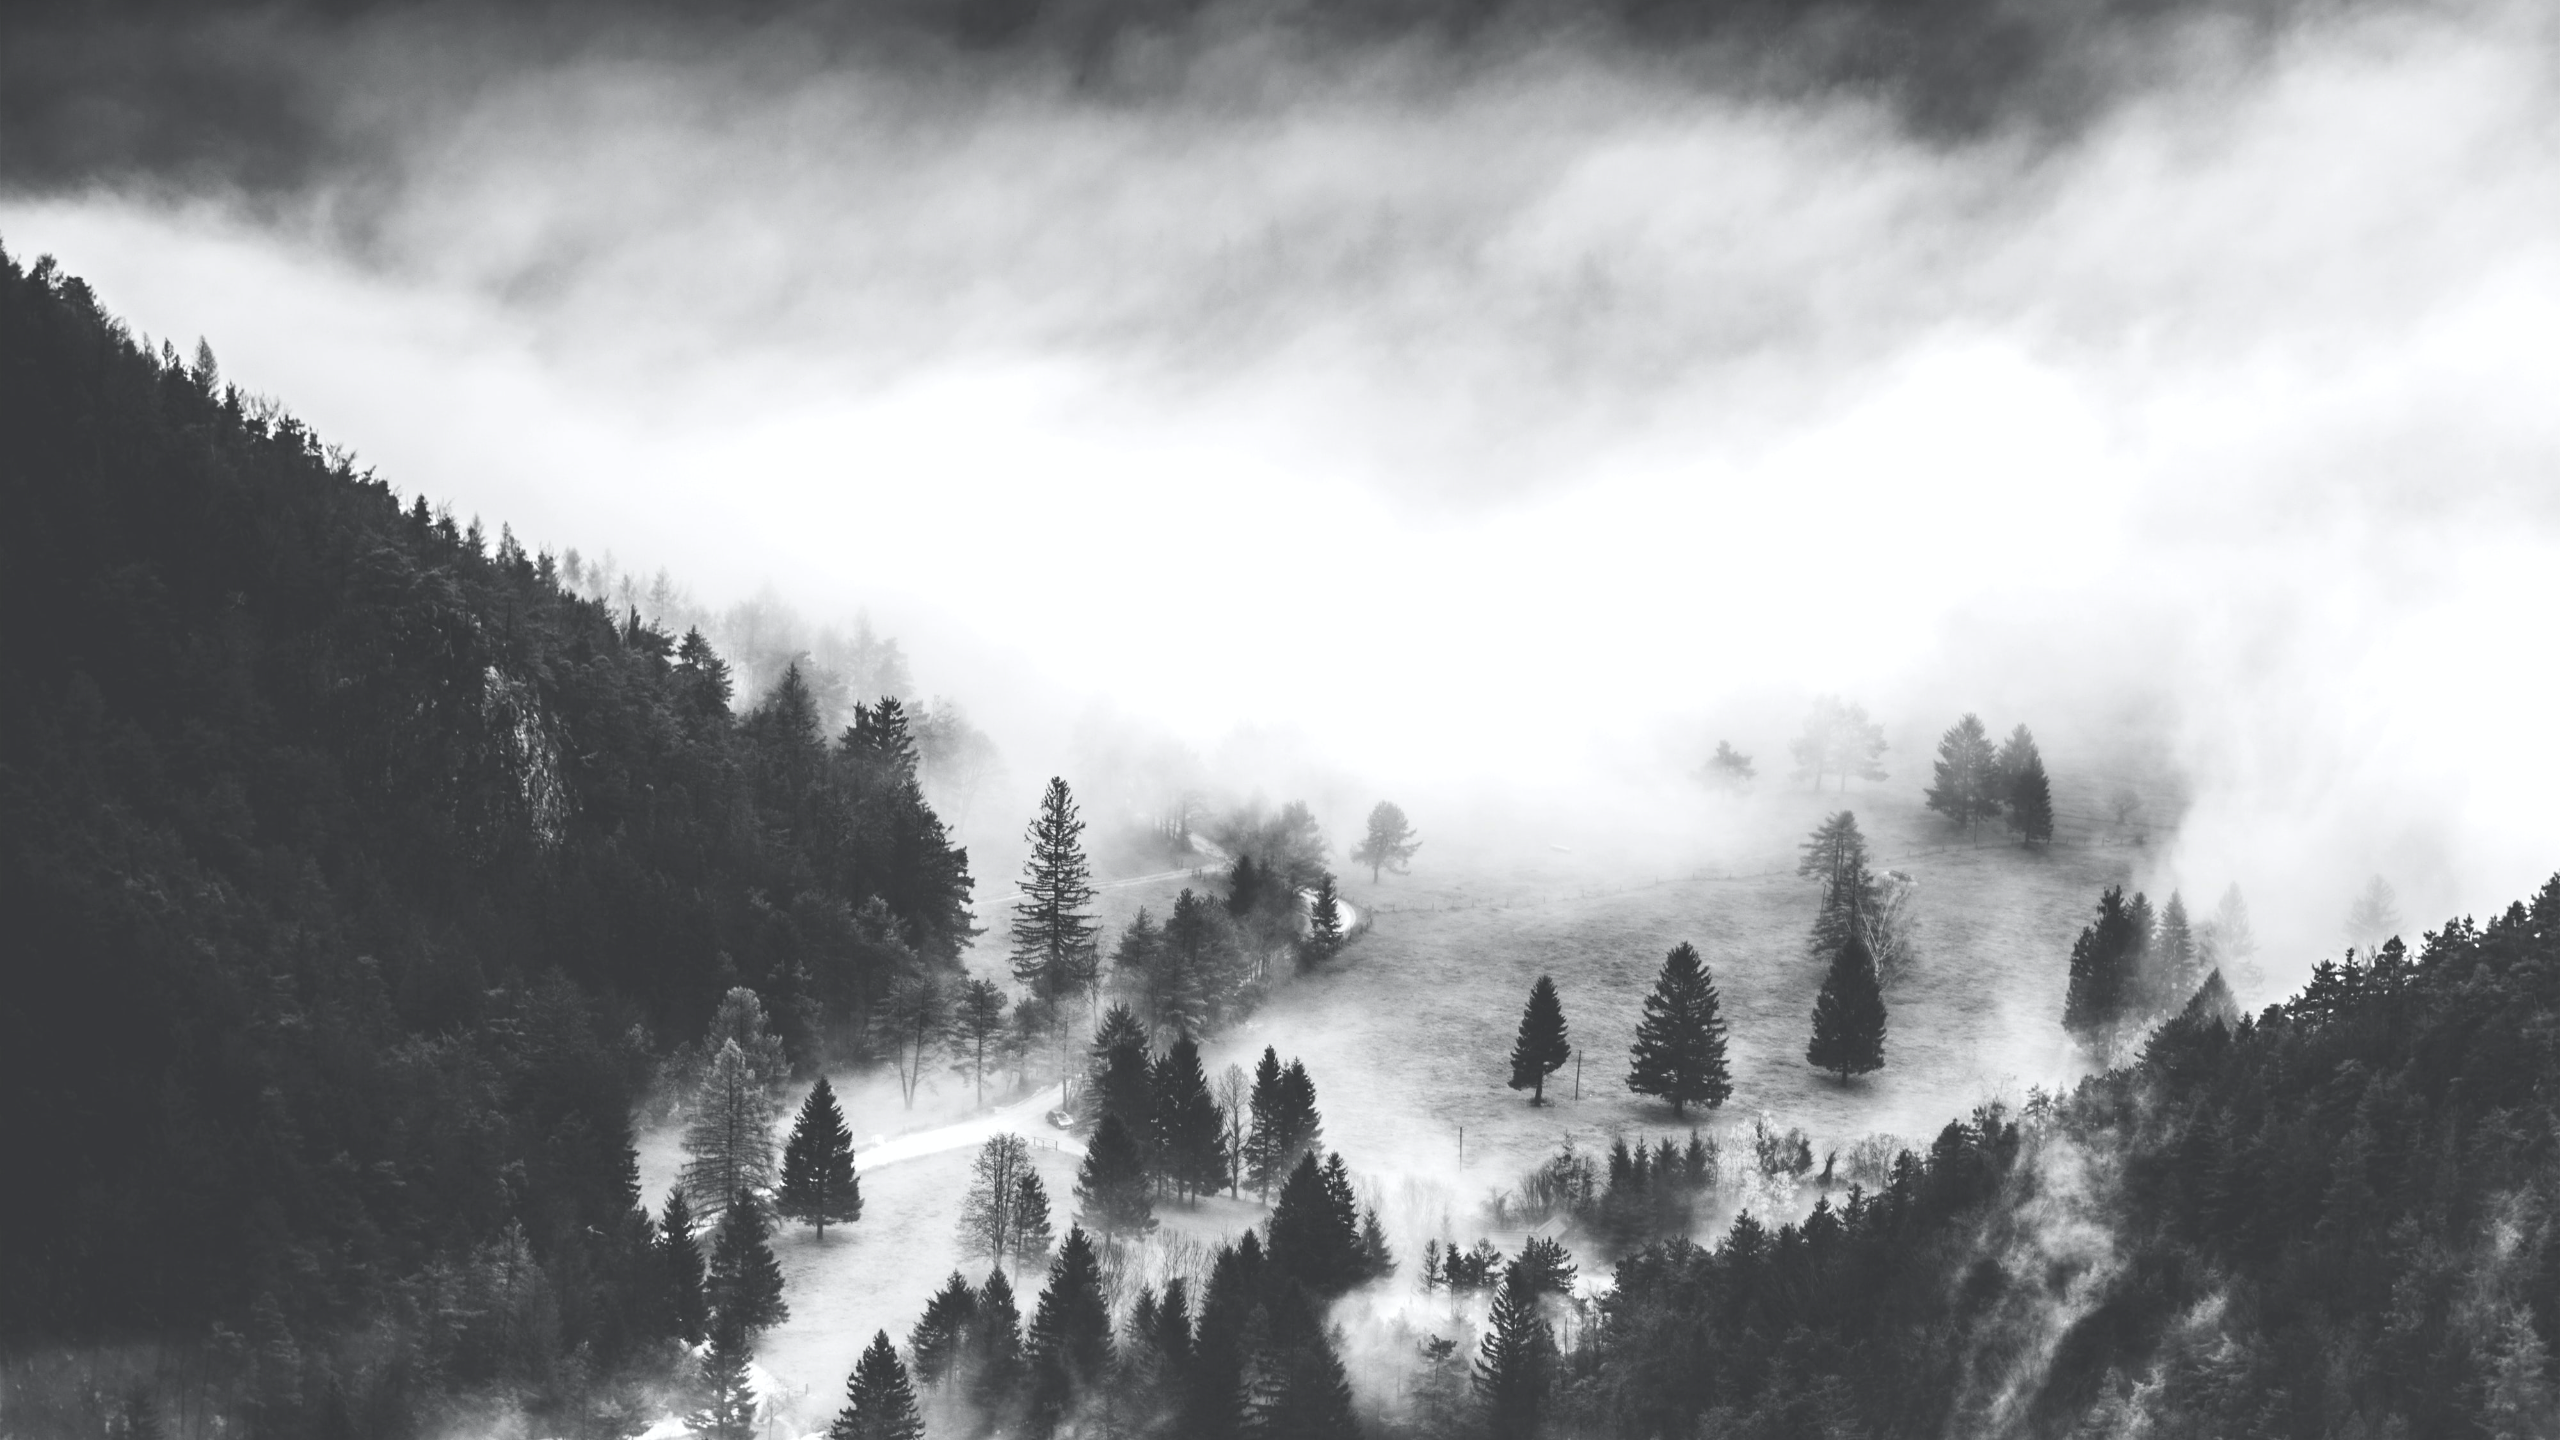 General 2560x1440 nature landscape trees mountains forest fog monochrome